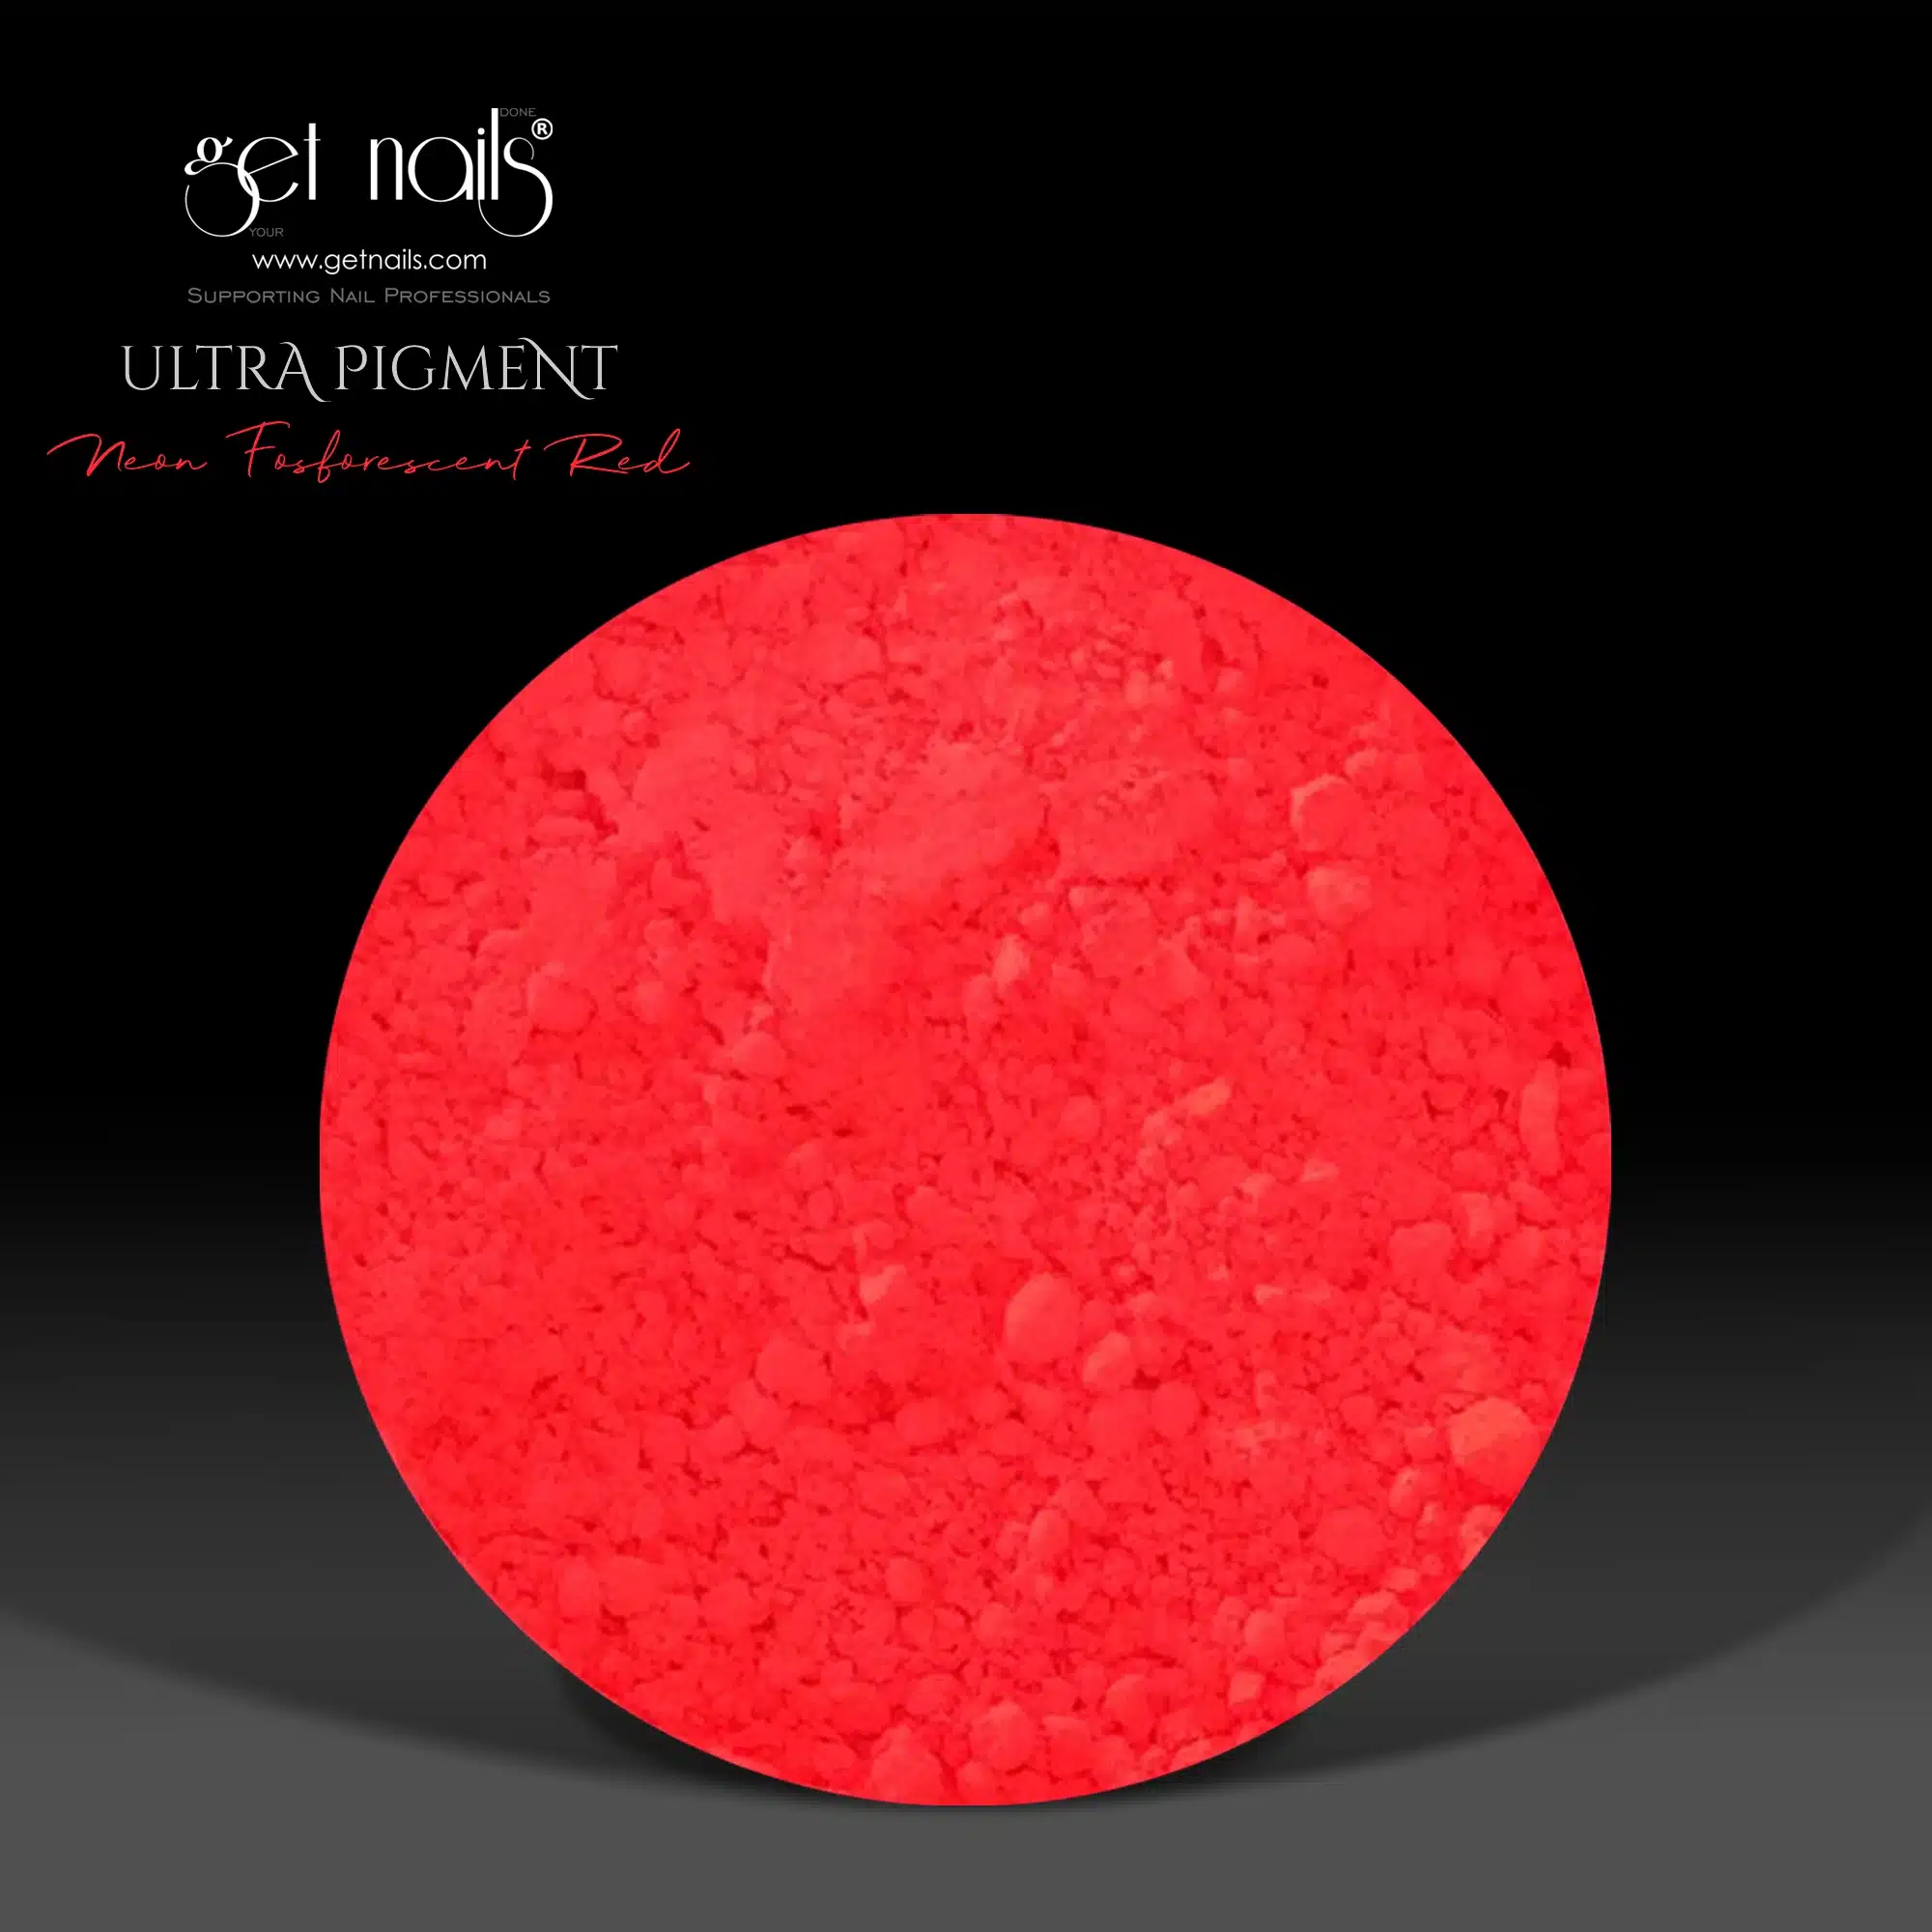 Get Nails Austria - Ultra Pigment Neon Fosforescente Rosso 5g